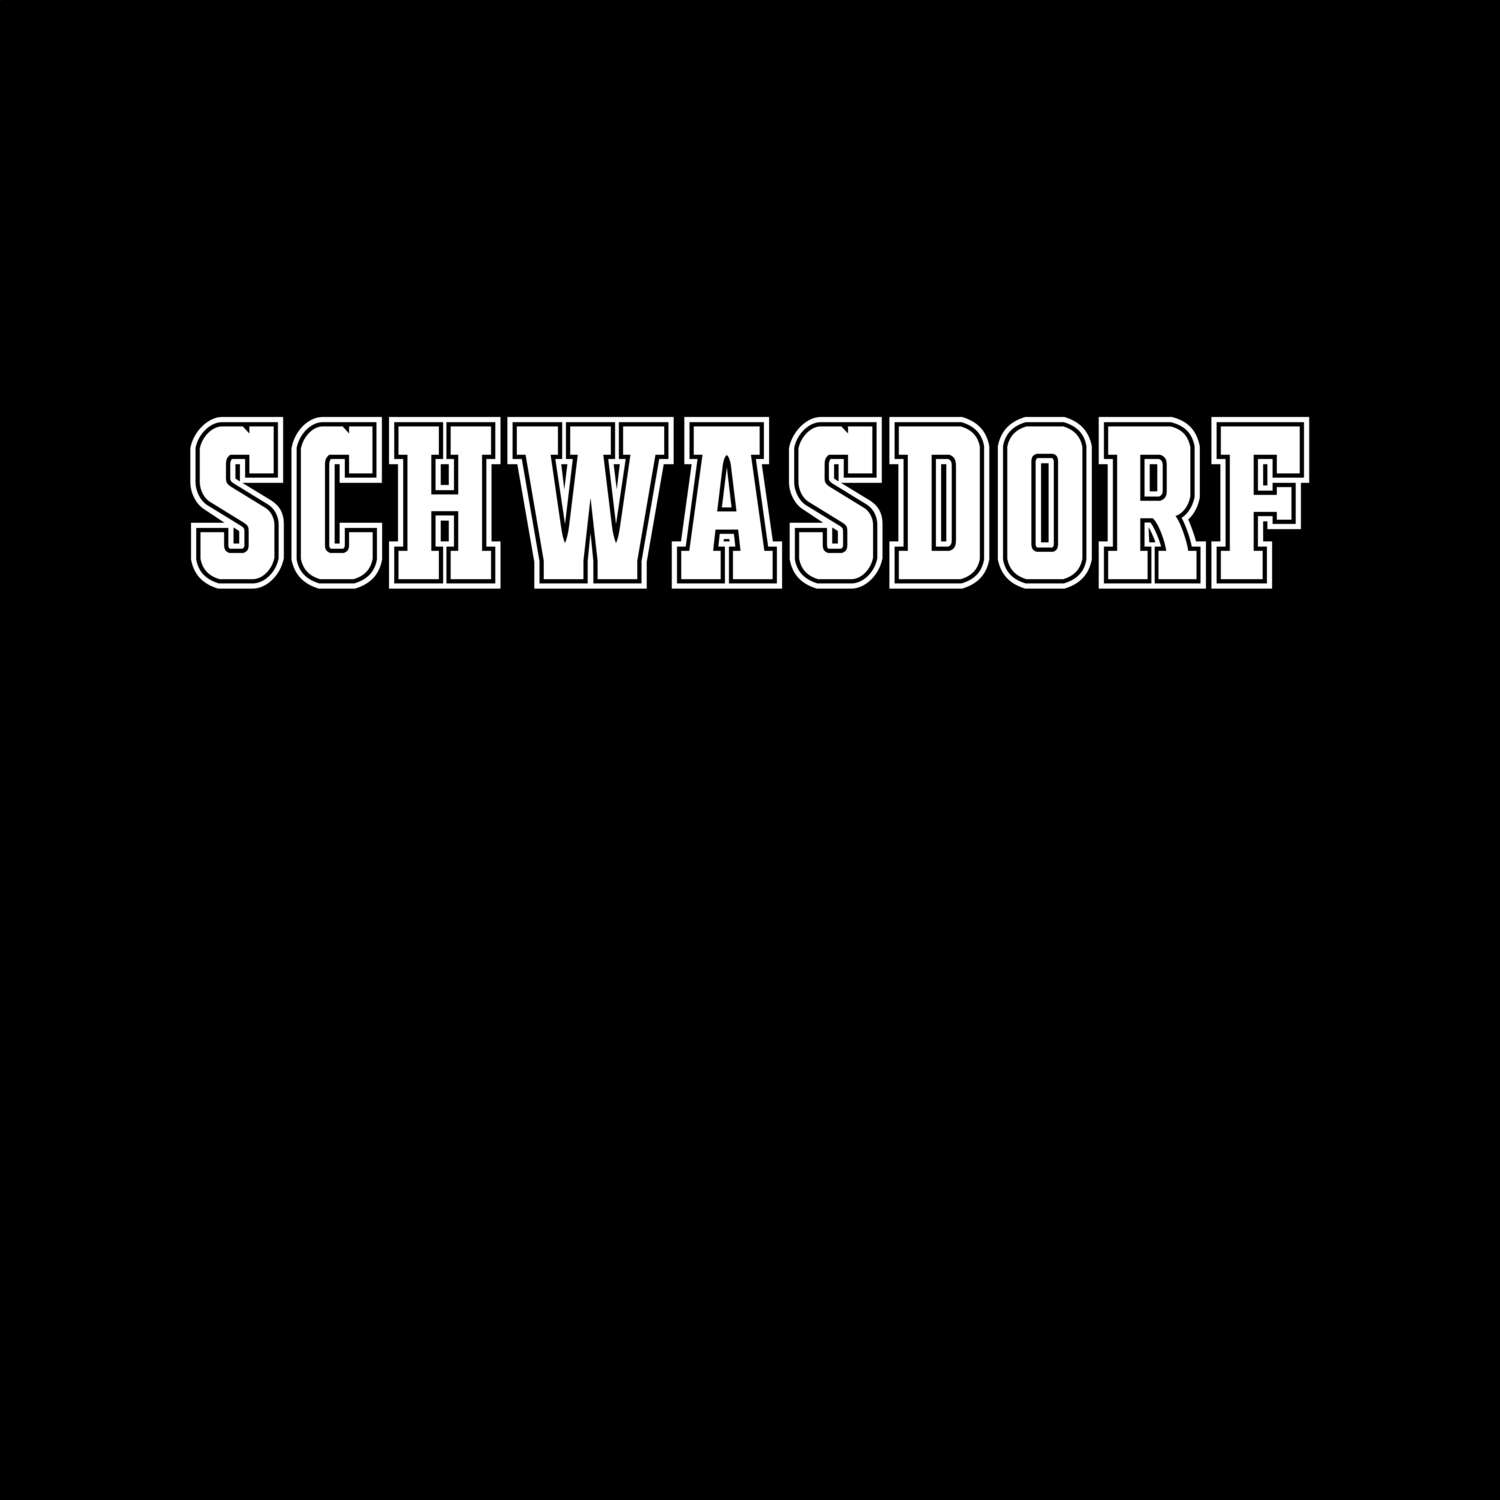 Schwasdorf T-Shirt »Classic«